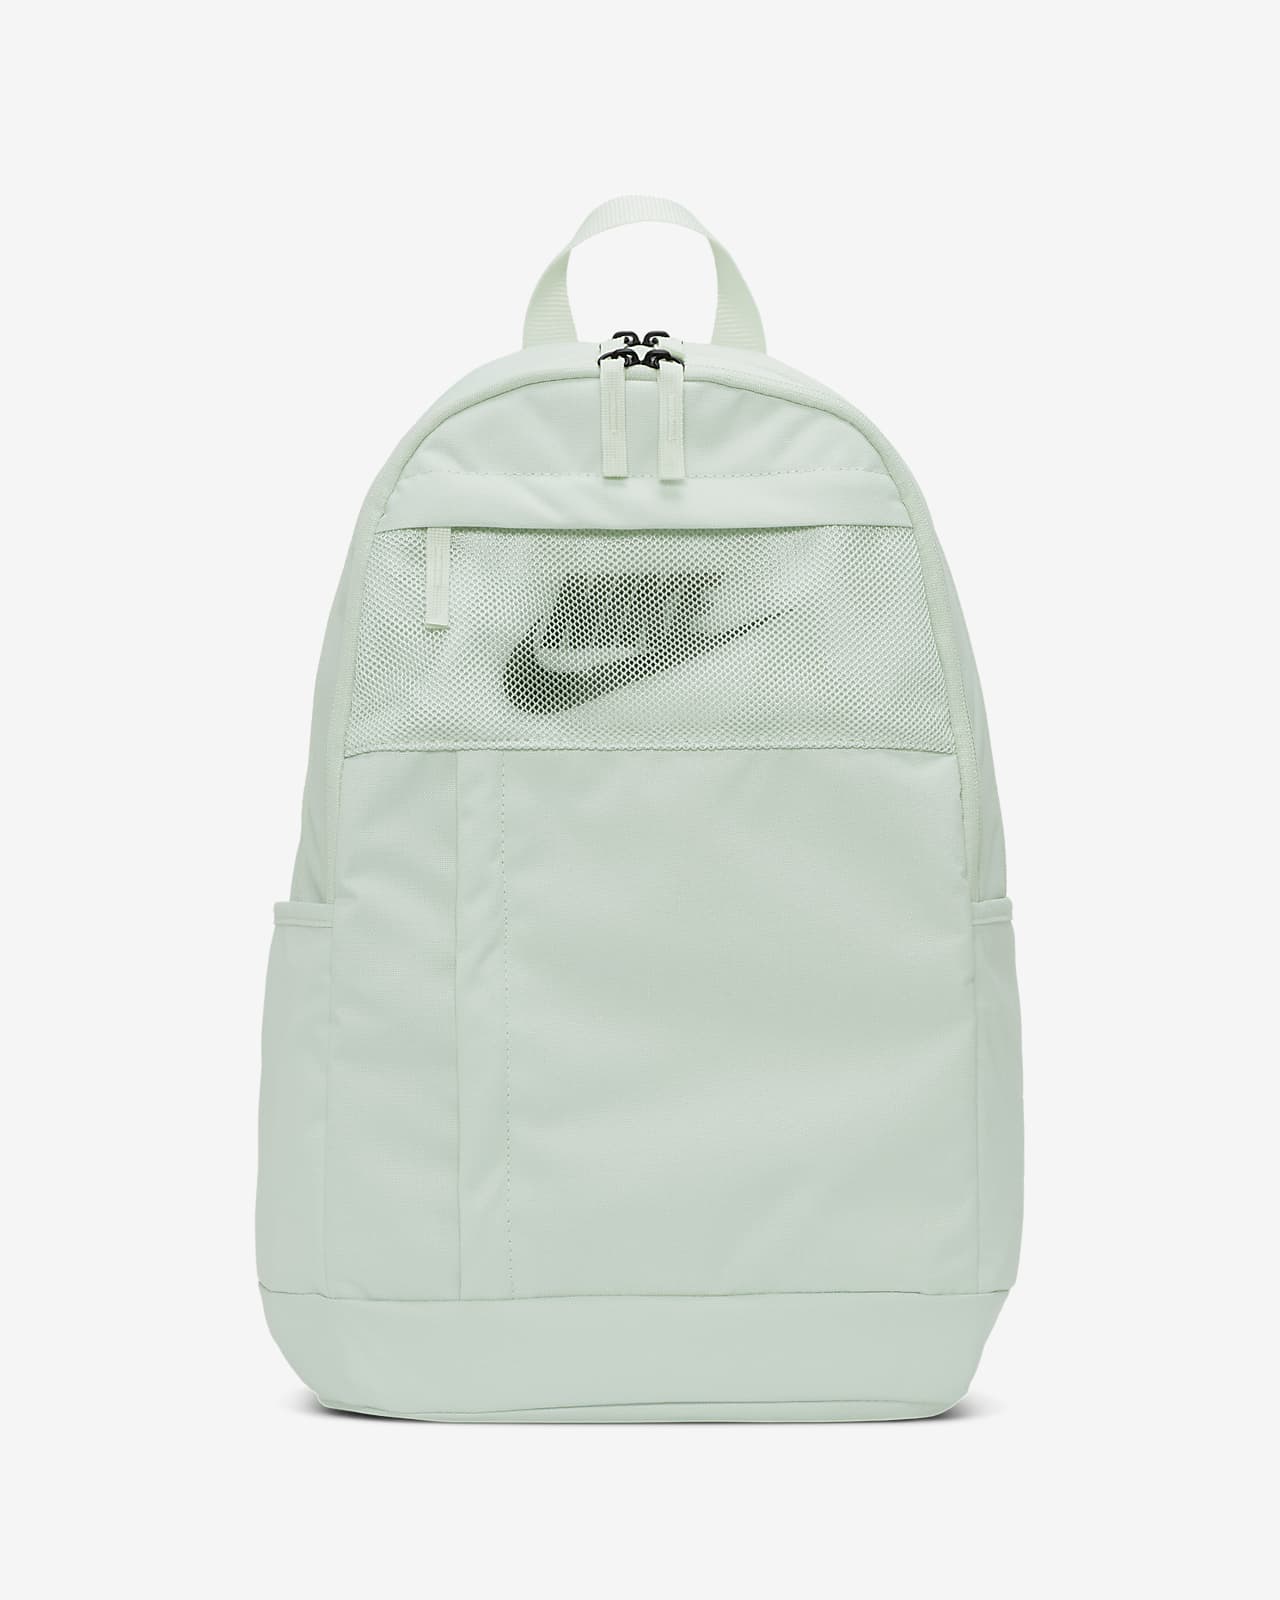 nike backpacks turquoise